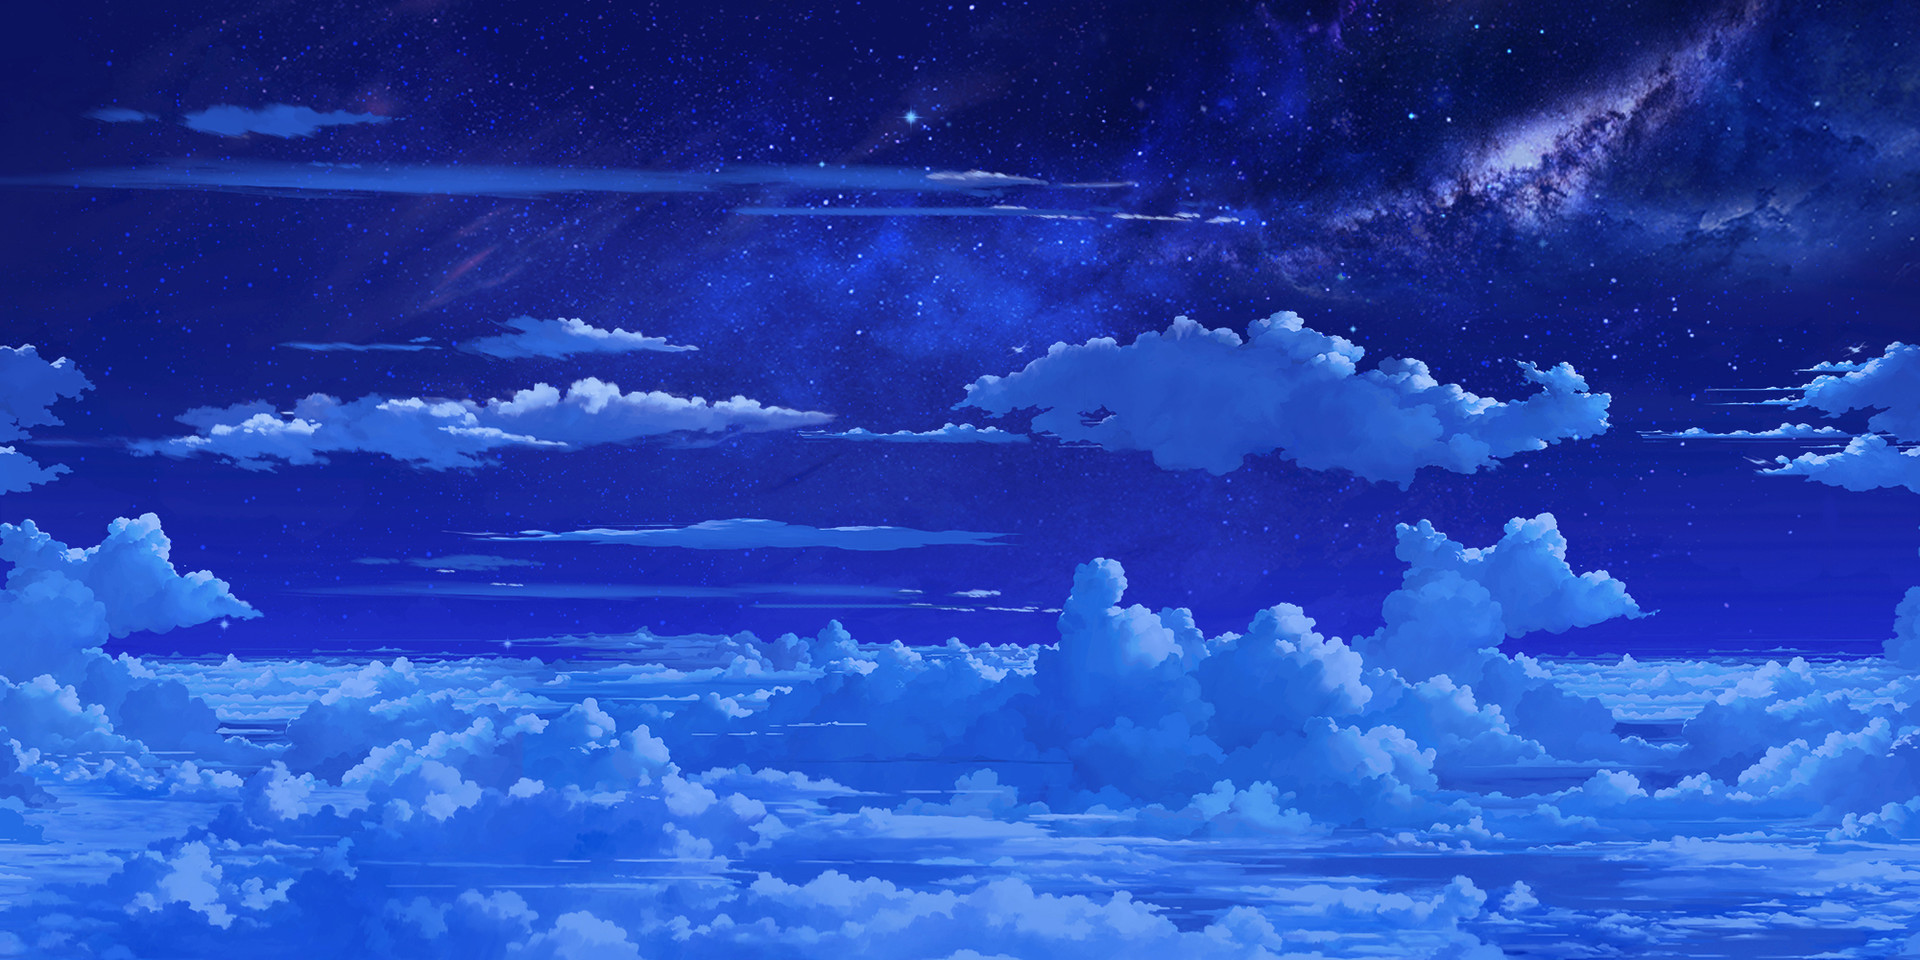 General 1920x960 Liuying JP digital art fantasy art clouds night sky landscape starry night night